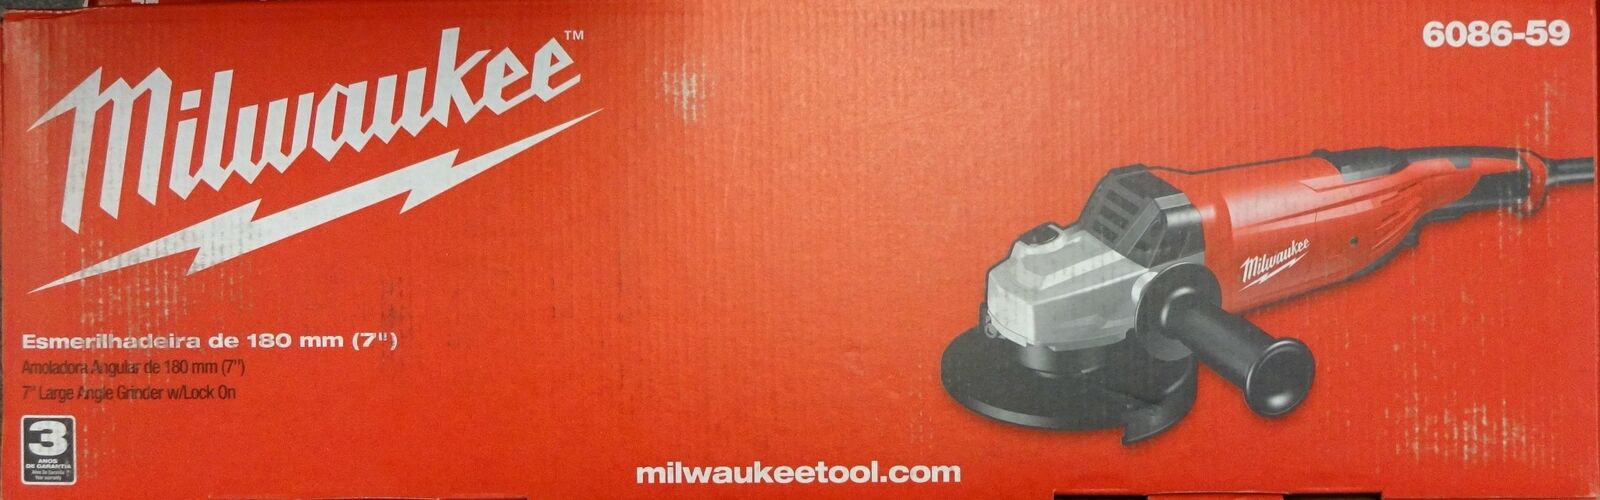 Milwaukee 6086-59 180mm Angle Grinder 220V Euro-Plug